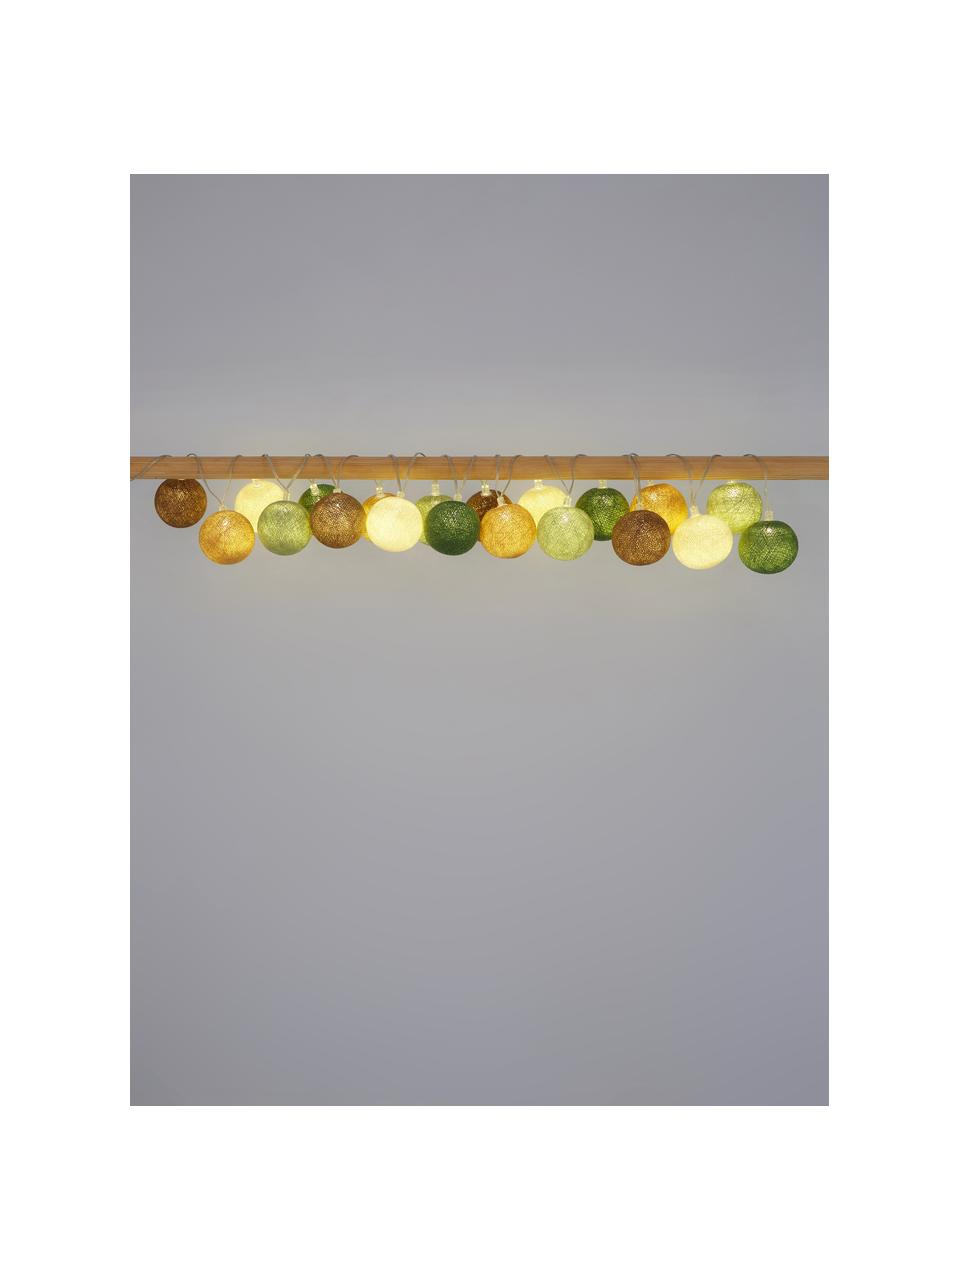 Svetelná LED reťaz Colorain, 378 cm, Zelená, tóny hnedej, biela, D 378 cm